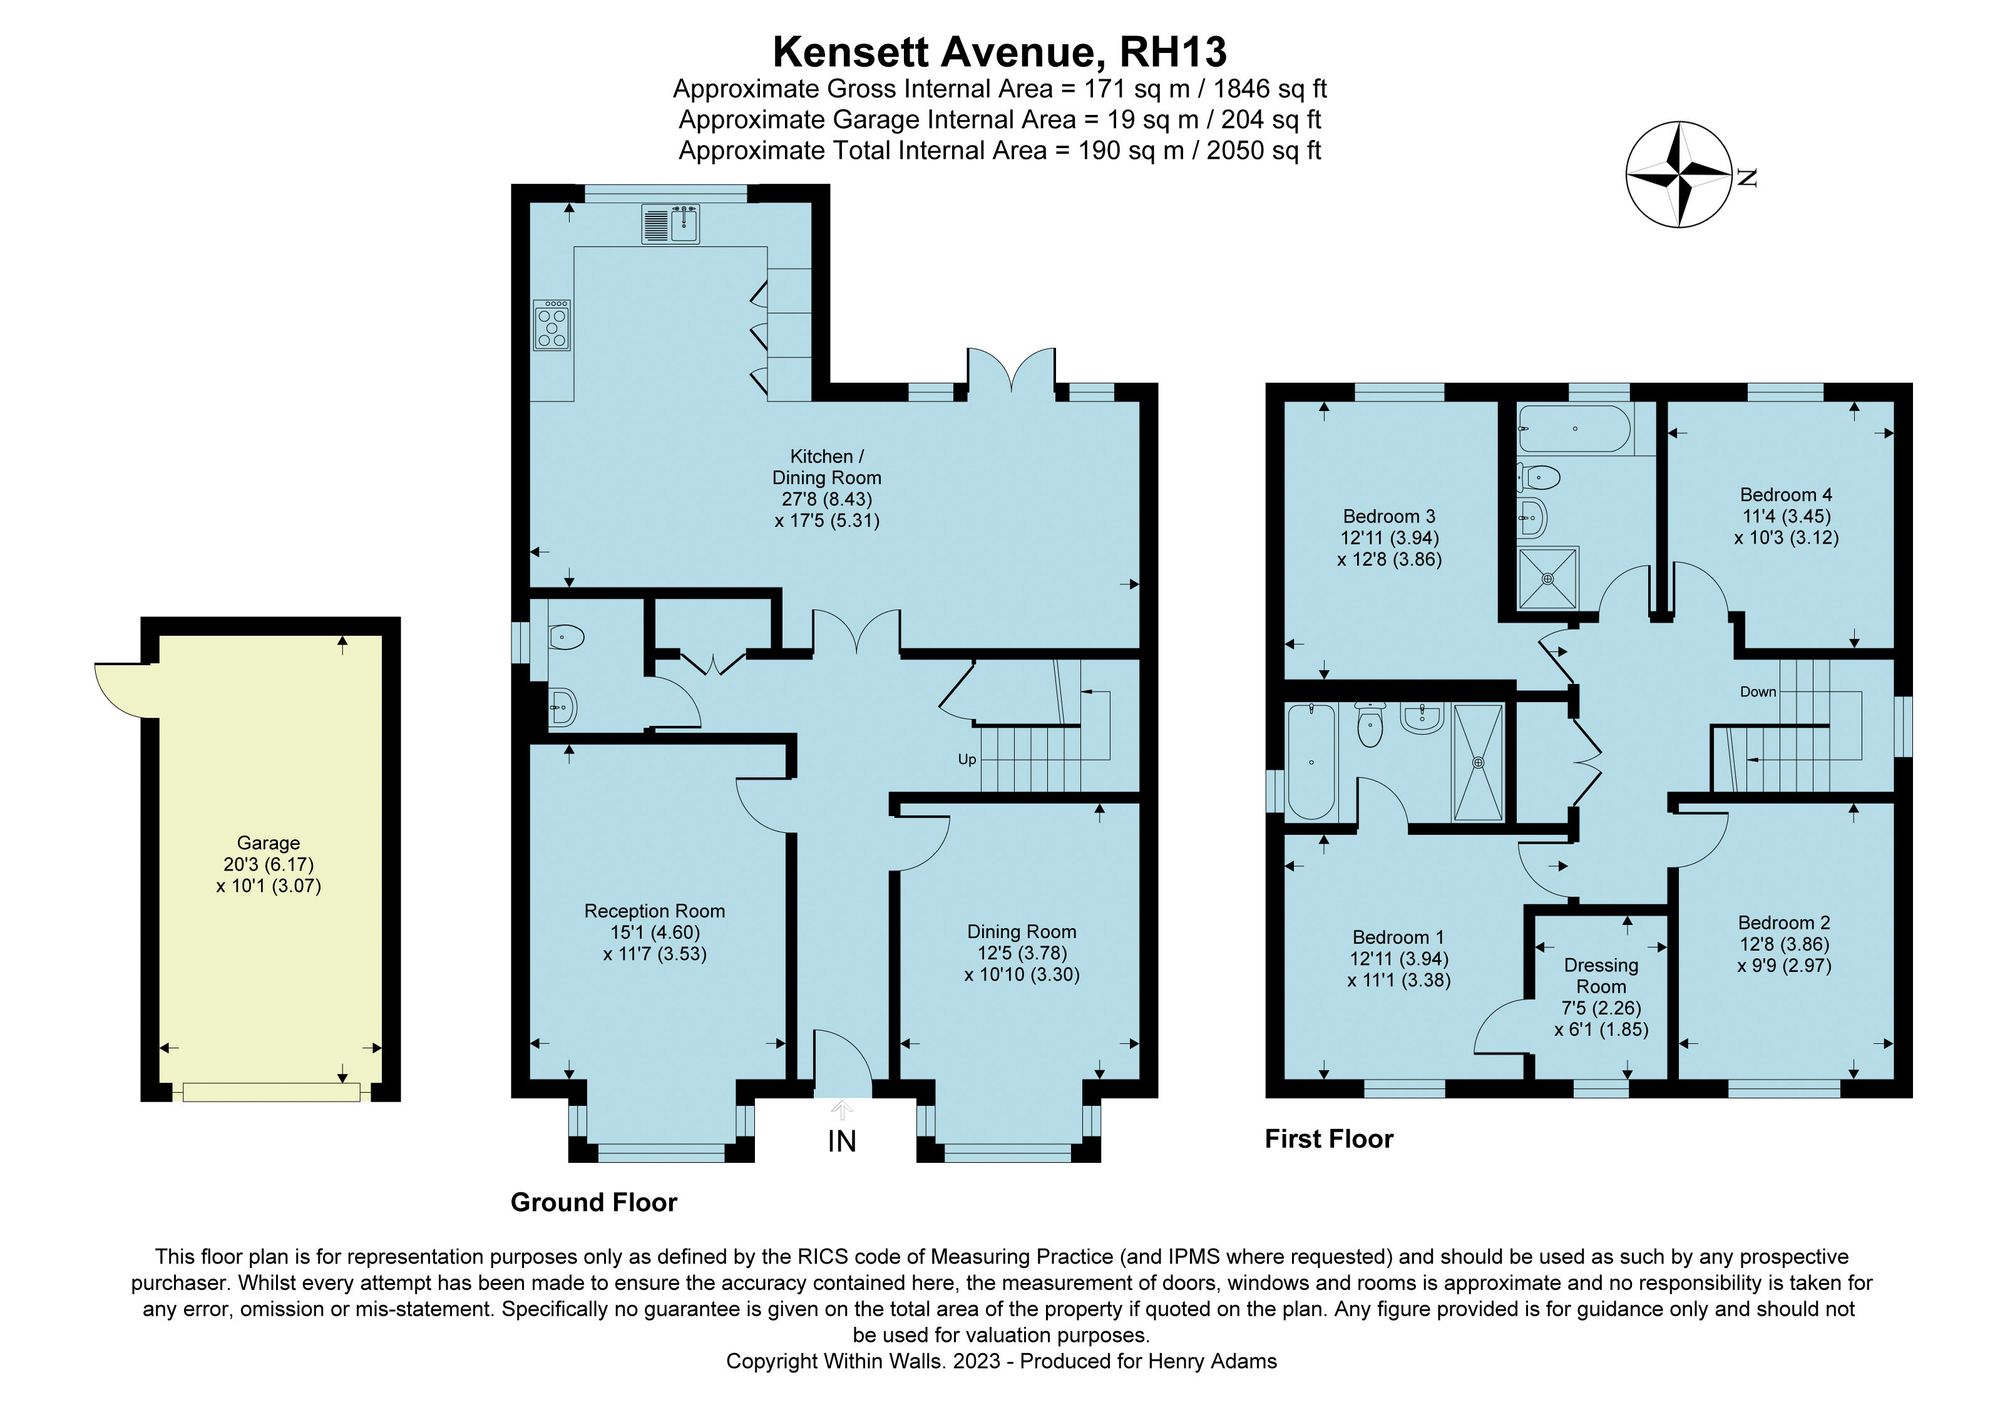 Kensett Avenue, Southwater, RH13 floorplans